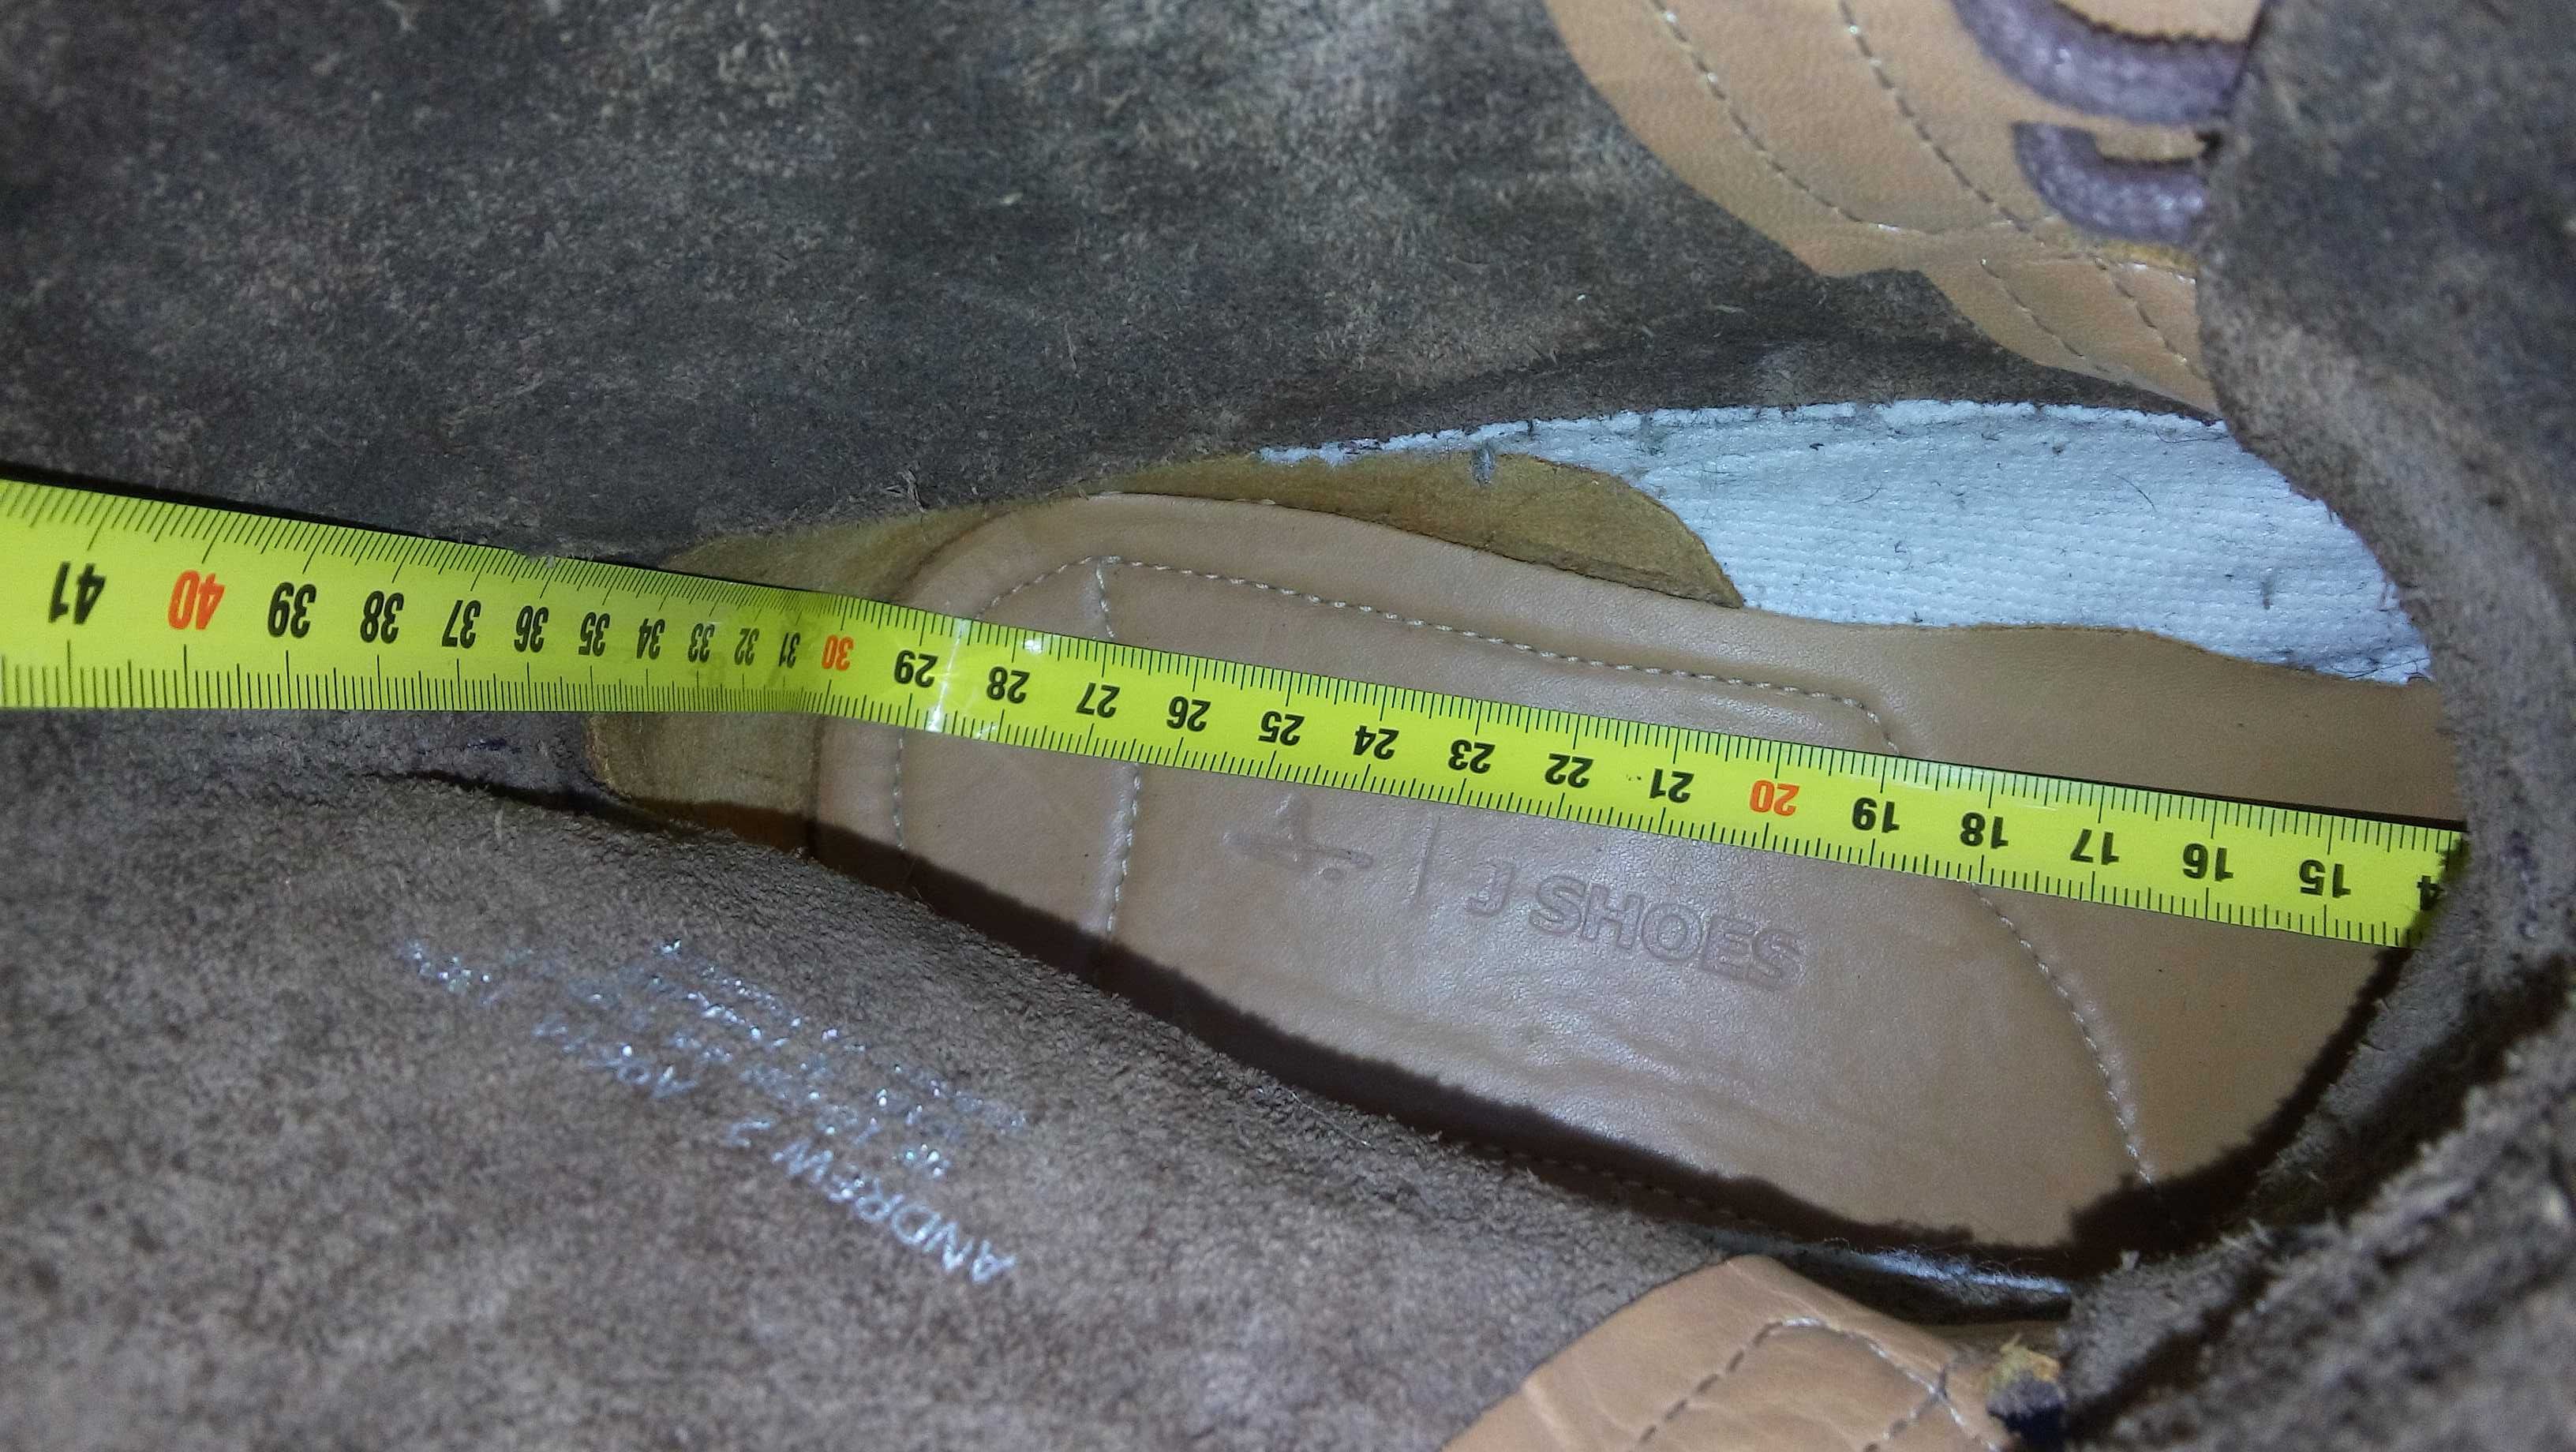 Крутые ботинки бренд J SHOES инспектор раз.44 стелька 29-29,5 см.Кожа.